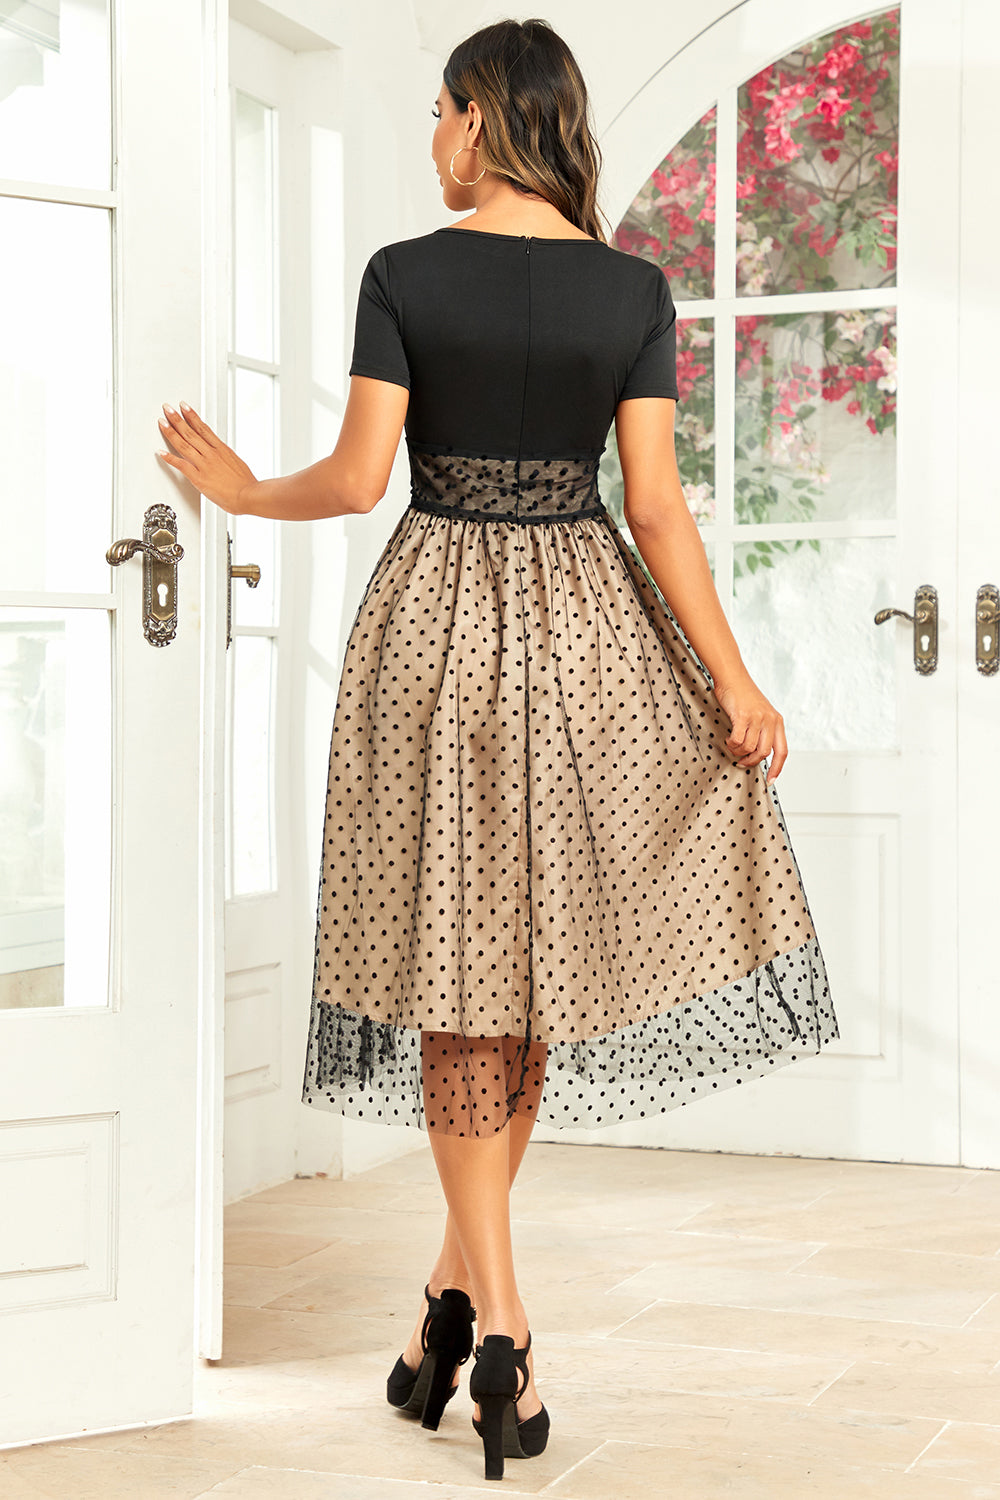 Hepburn Style Black Polka Dots Vintage 1950s Dress